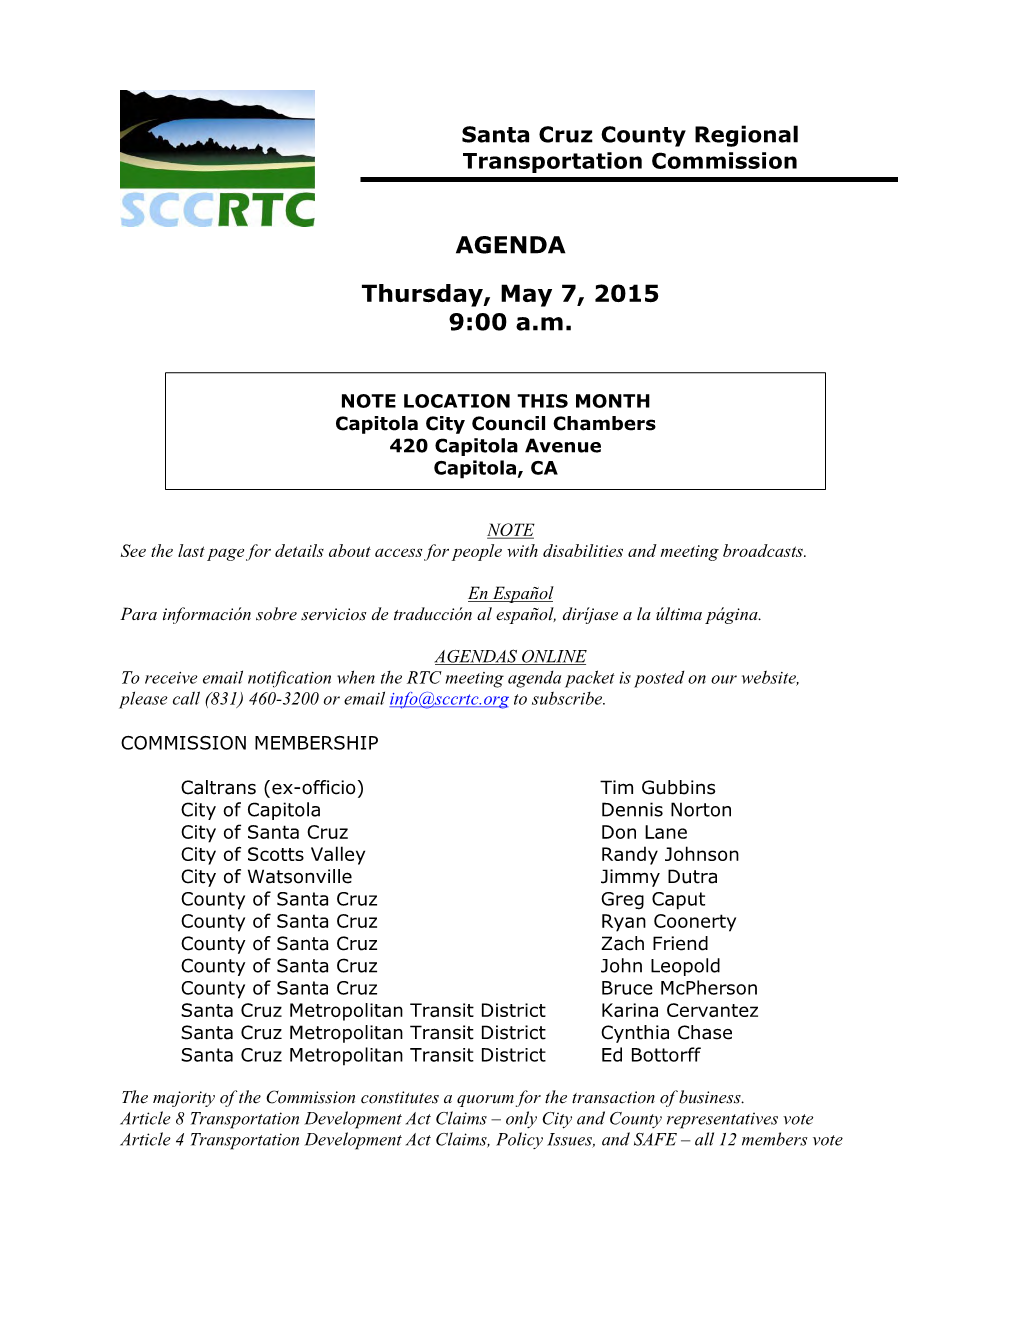 RTC Agenda May 7, 2015